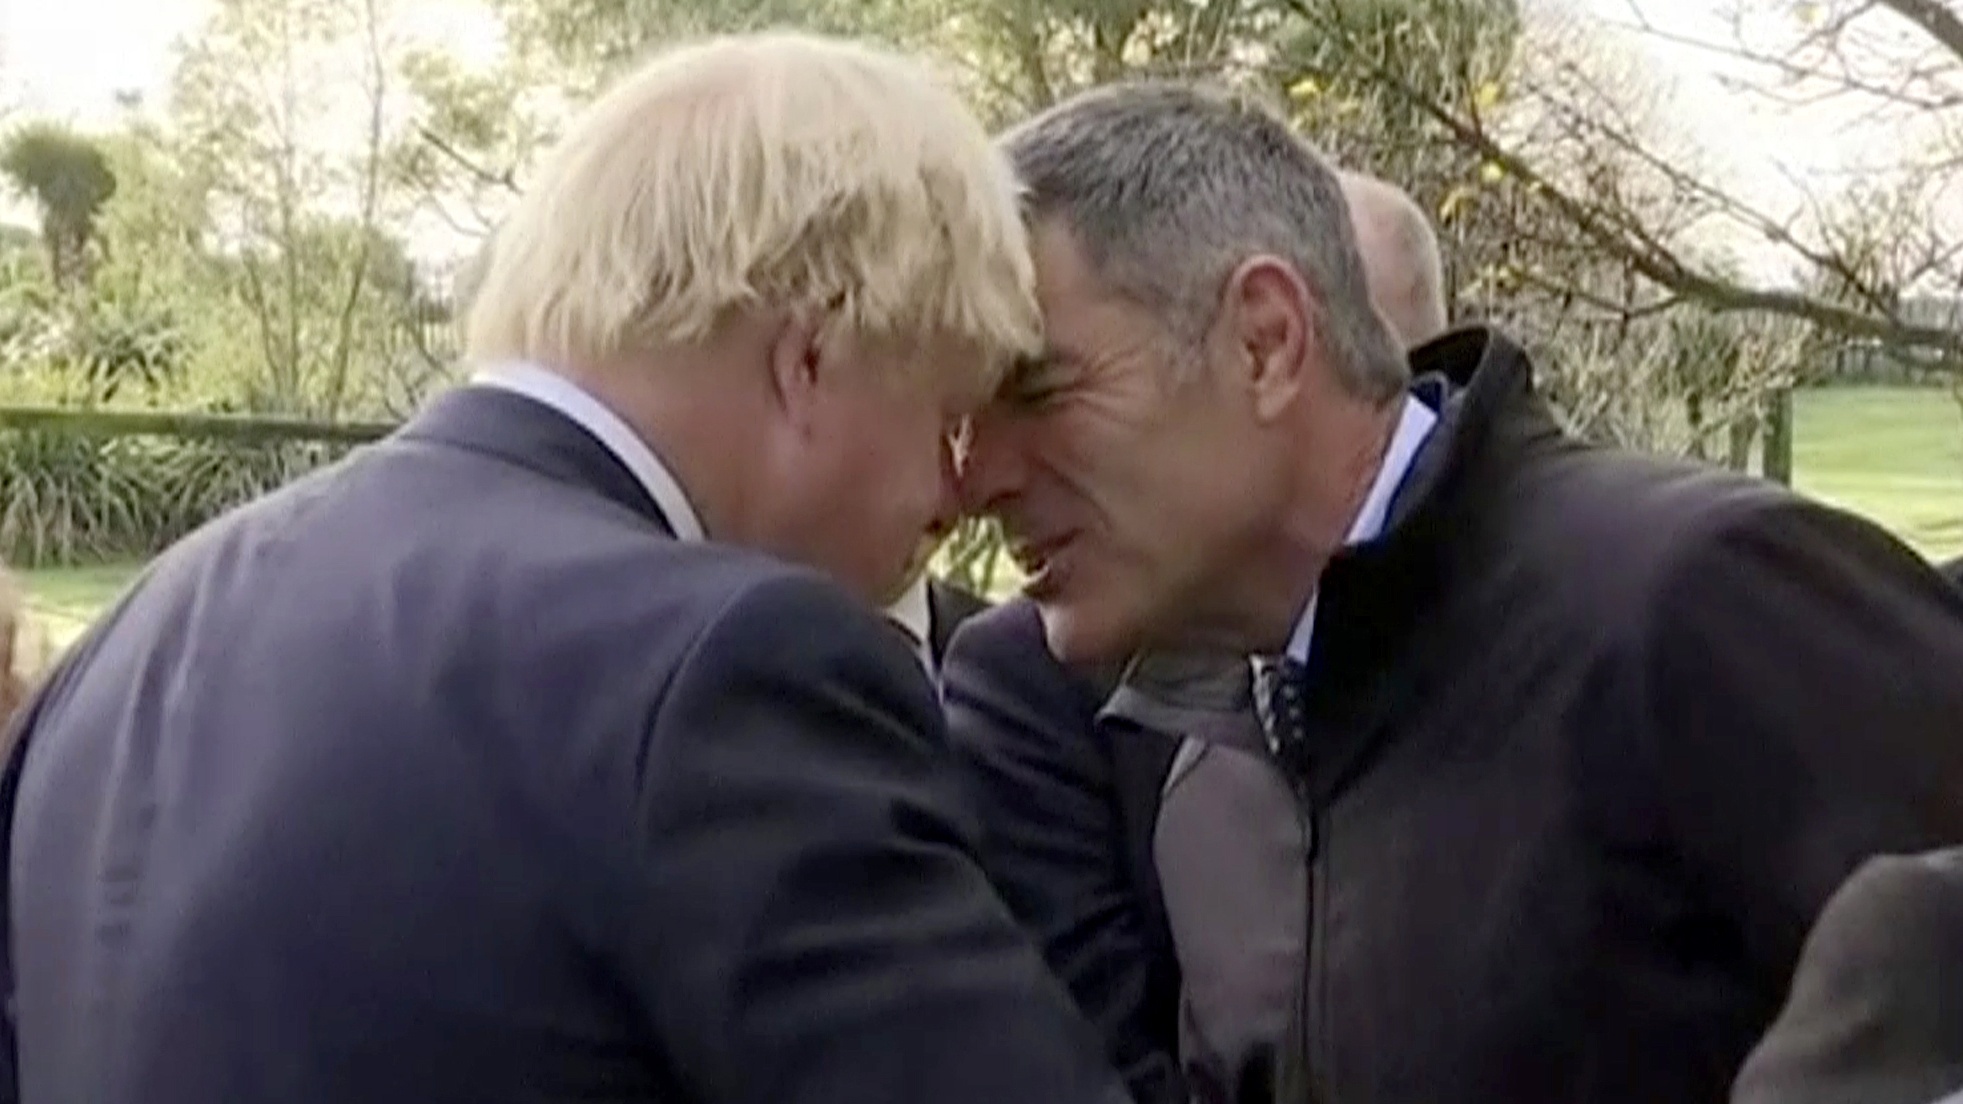 Boris Johnson performs a hongi welcome with a New Zealand MP (TVNZ via AP)